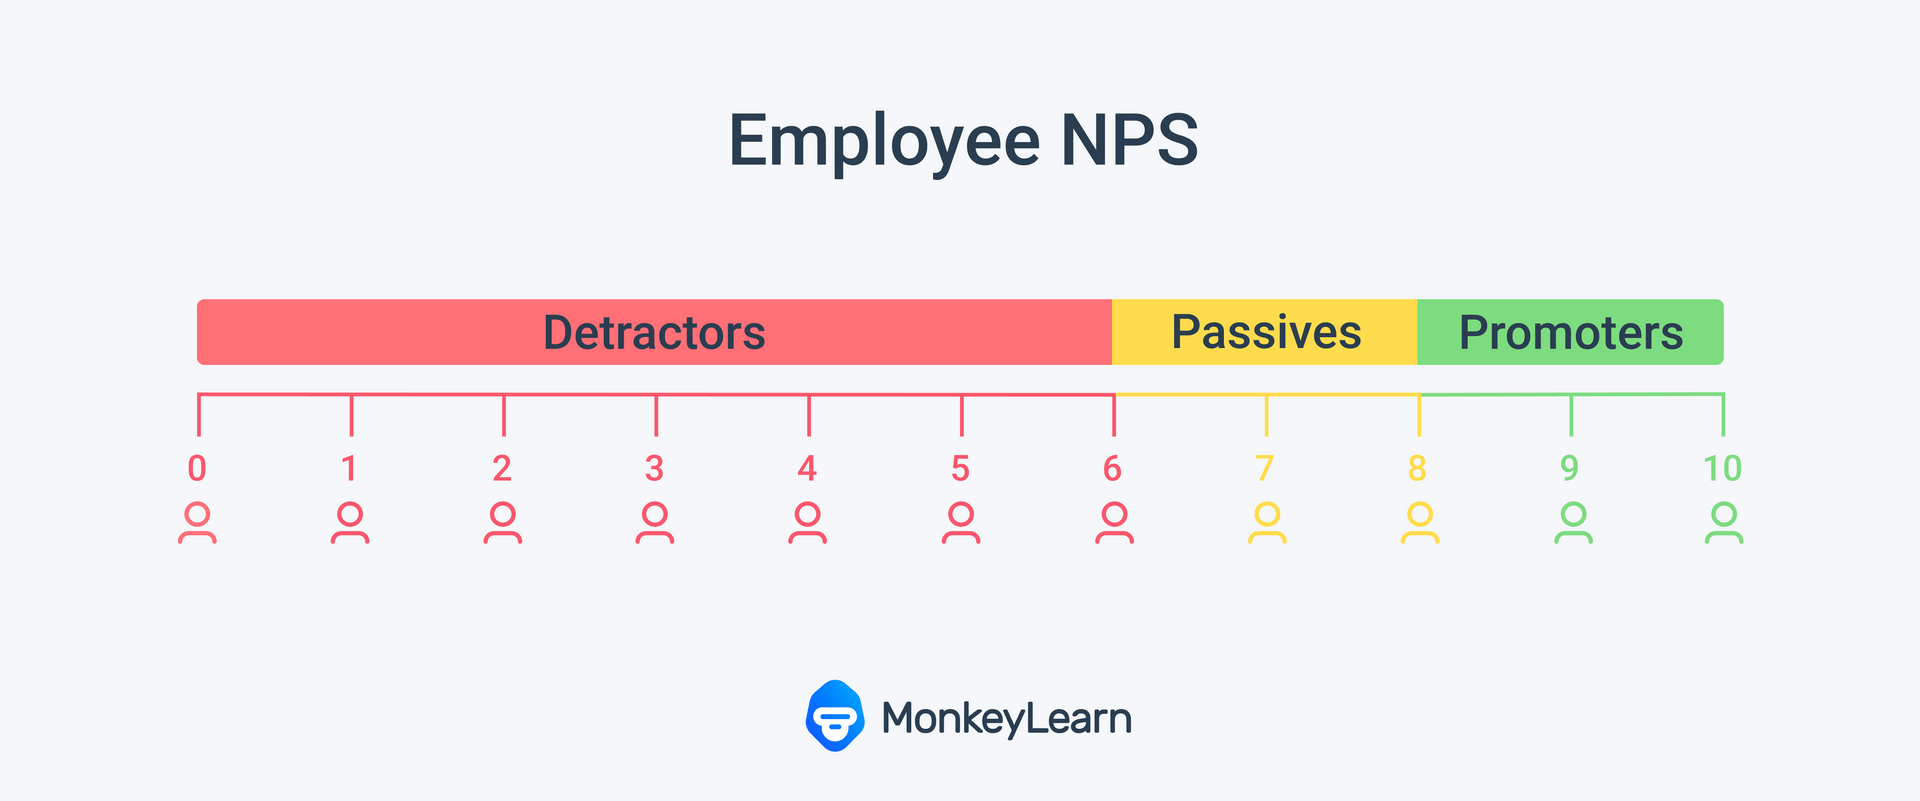 Employee Net Promoter Score Chart showing 9-10: Promoters, 7-8: Passives and 0-6: Detractors